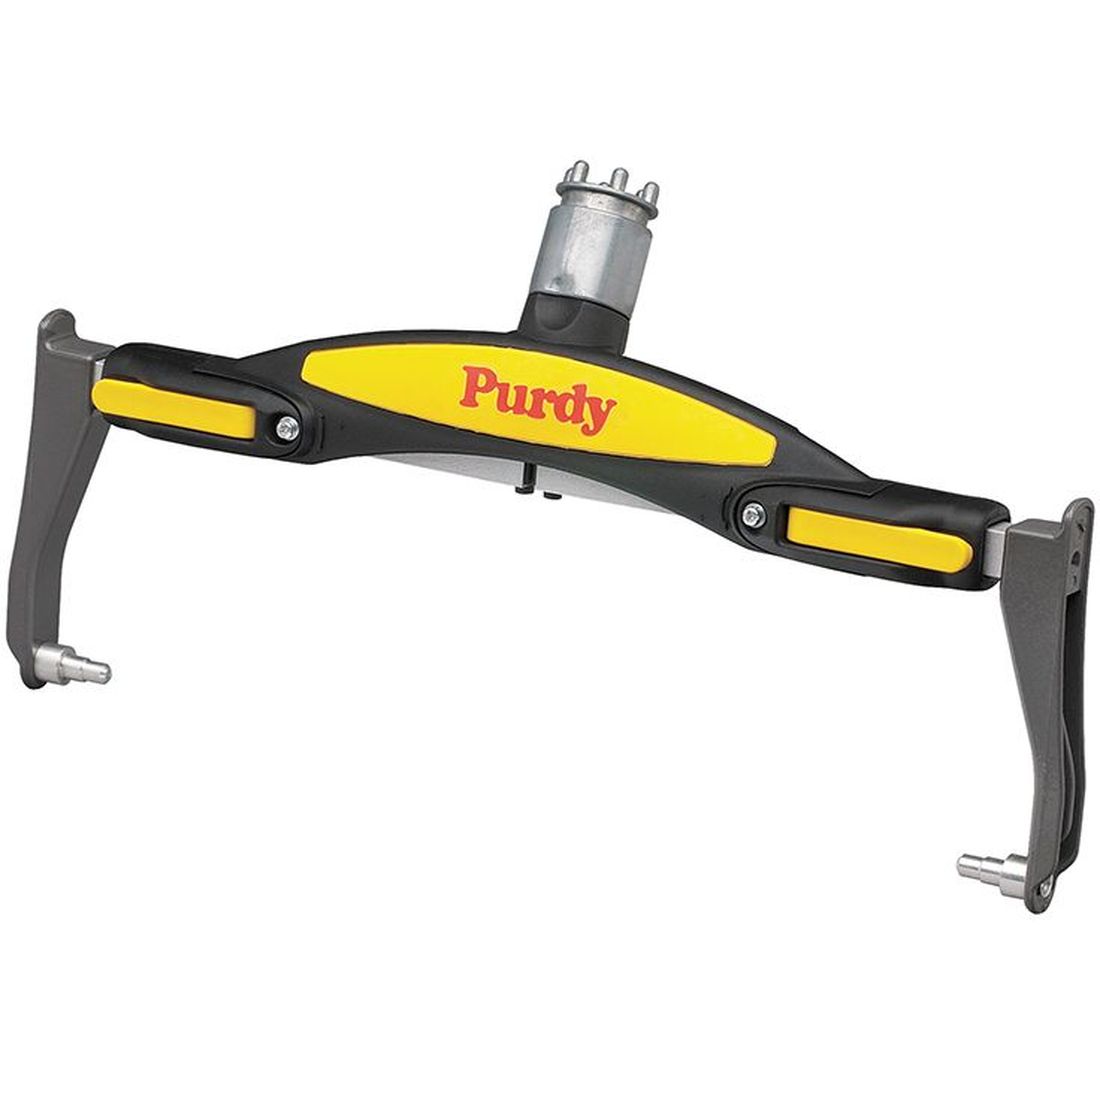 Purdy Revolution Premium Adjustable Frame 305-457mm (12-18in)                        